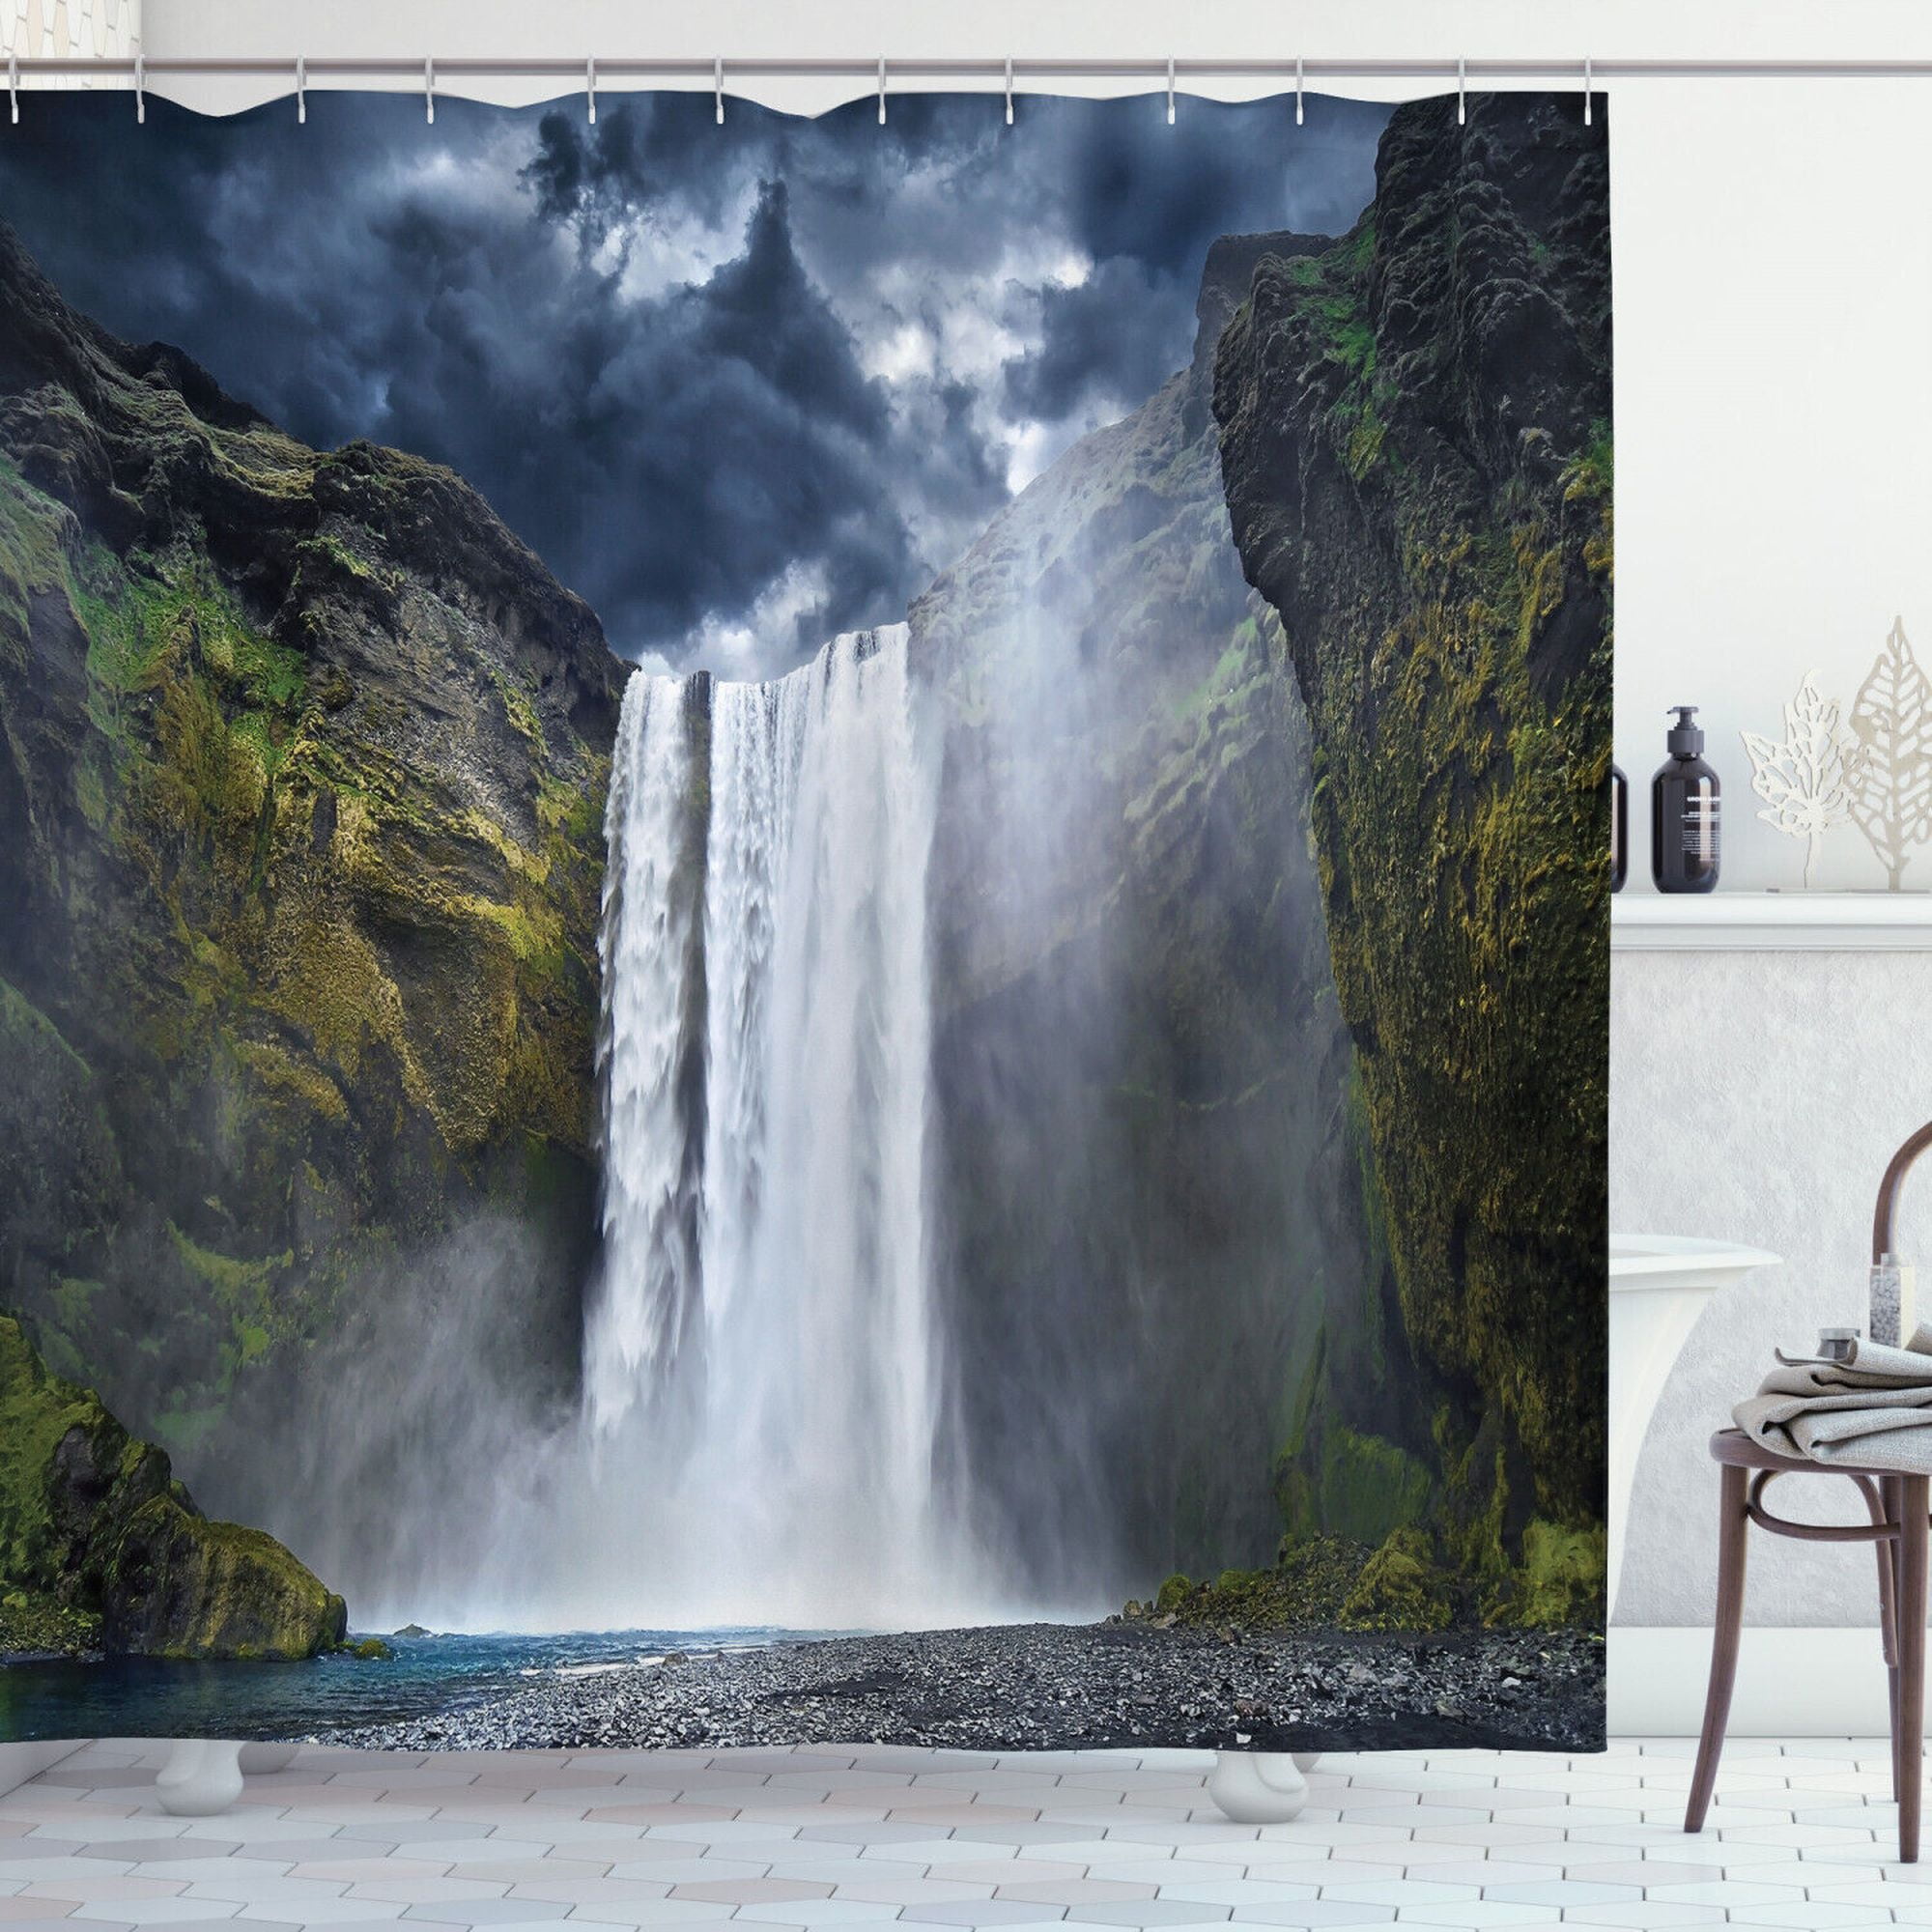 Cliffside Haven: American Landscape Shower Curtain for a Serene ...